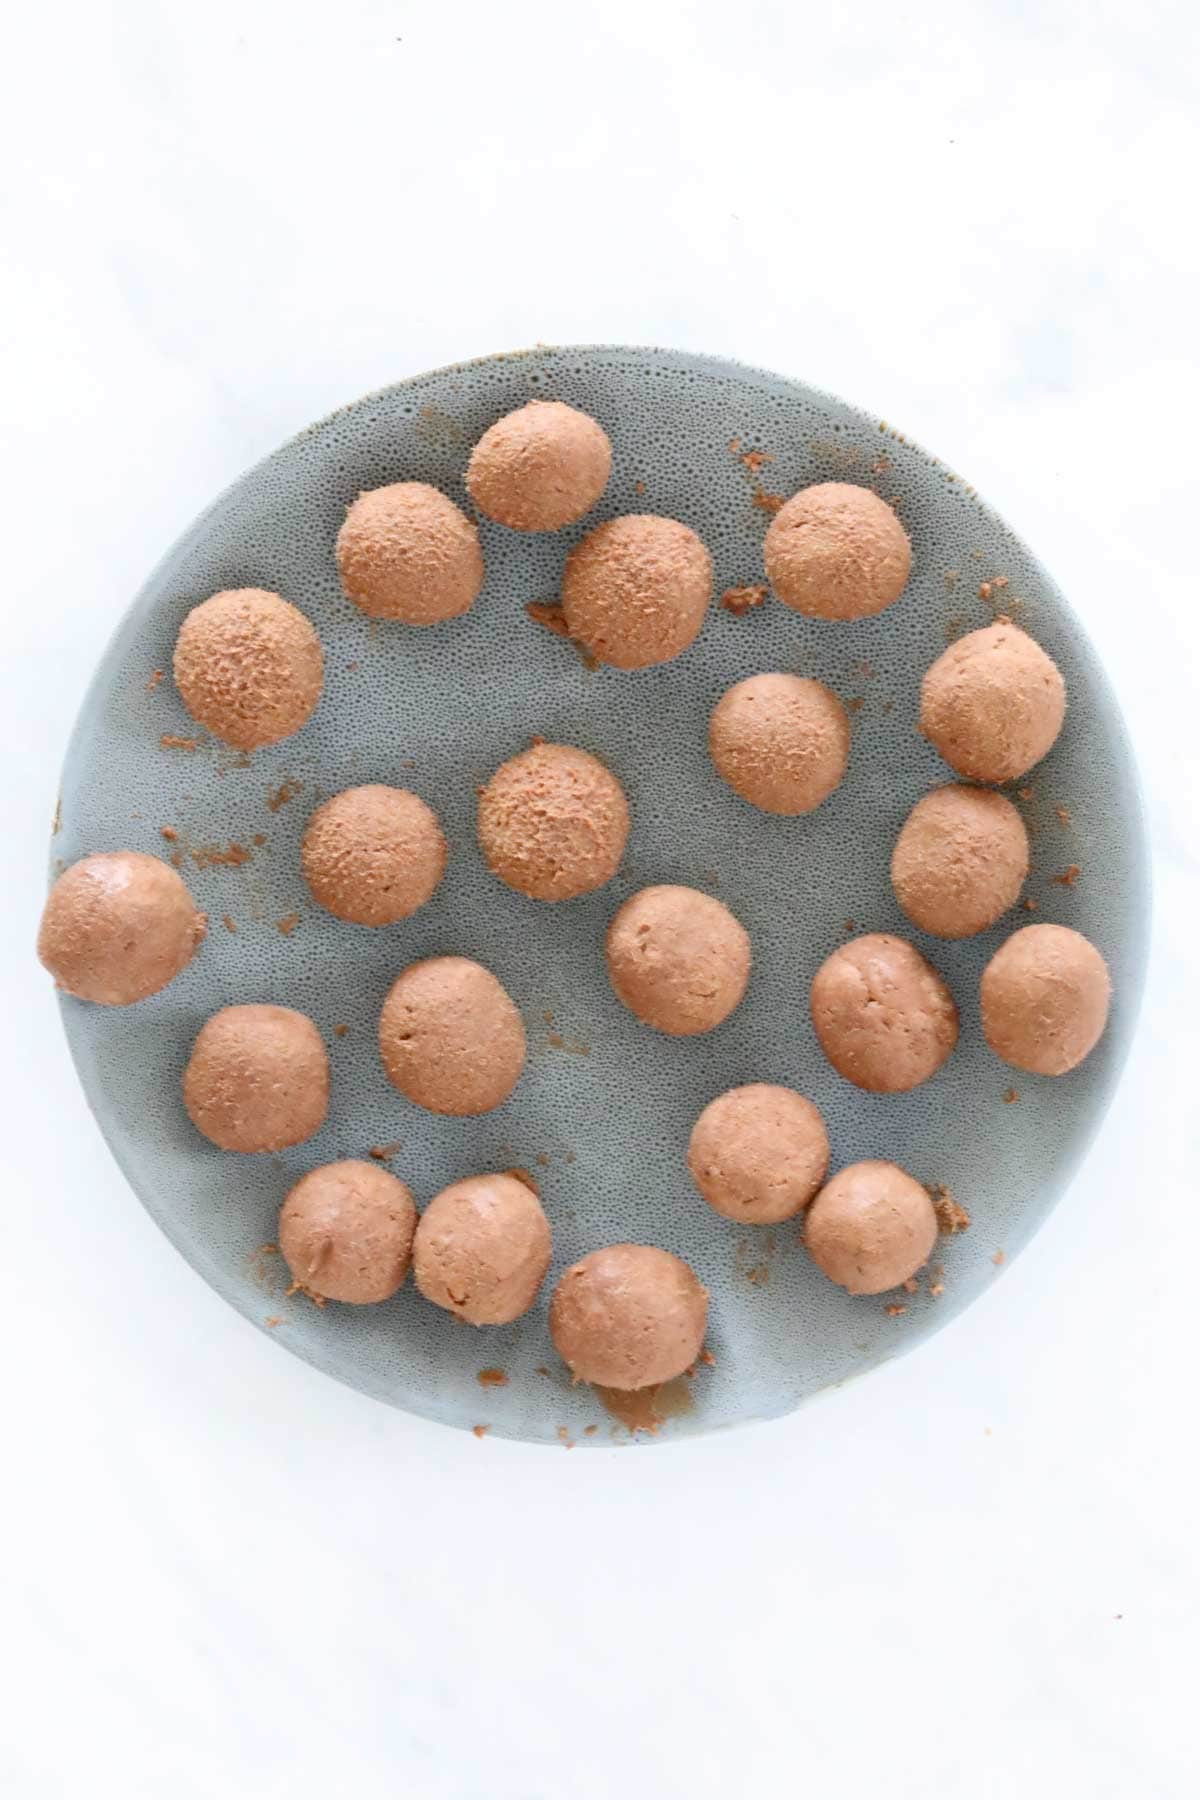 Rolled chocolate cheesecake balls.